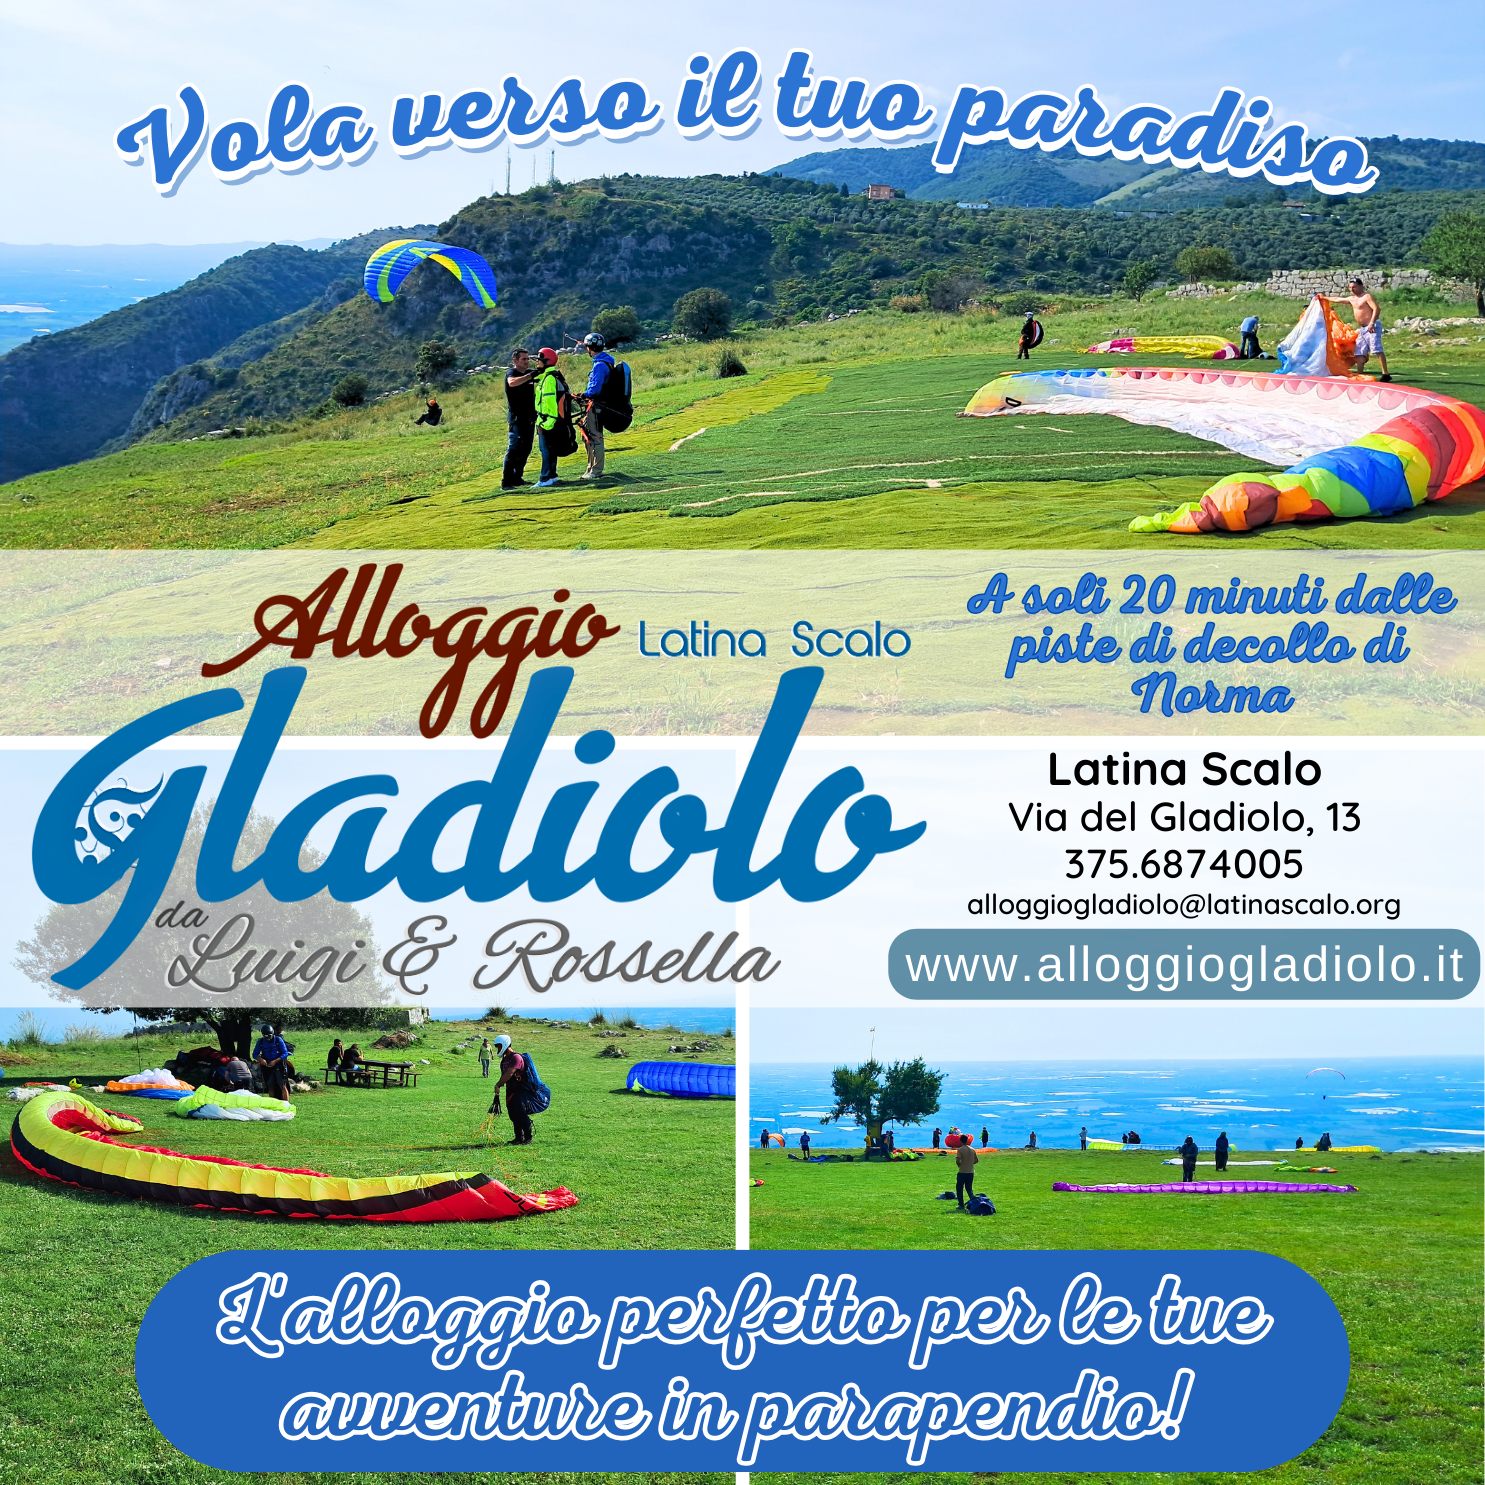 Alloggio Gladiolo - Latina Scalo - Parapendio Norma - Paragliding